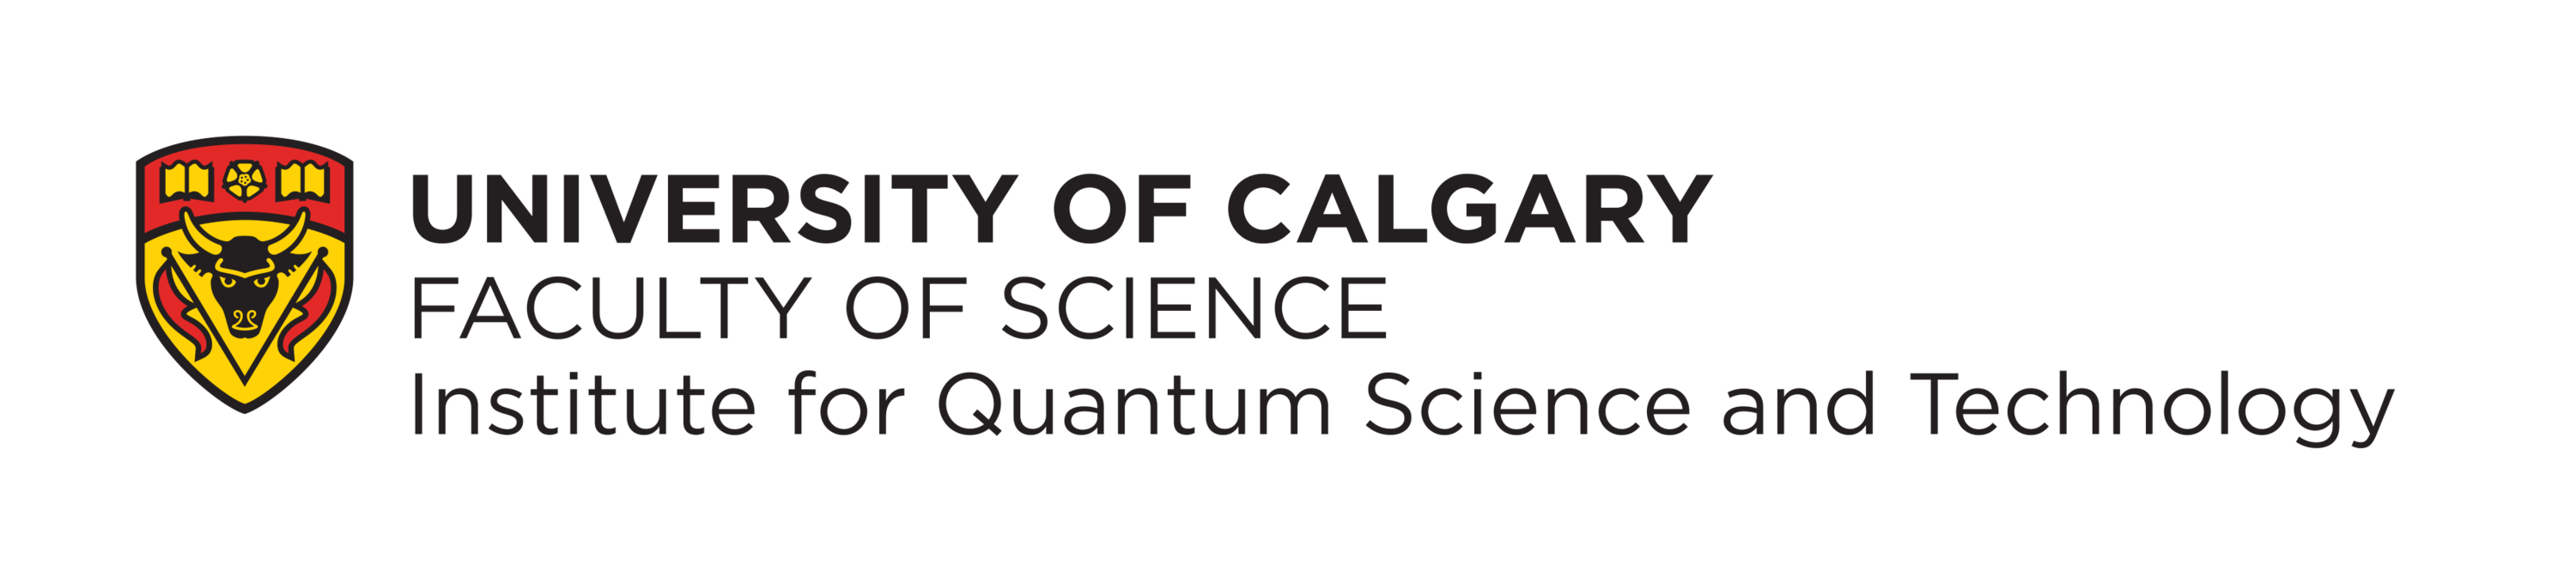 University of Calgary, Faculty of Science